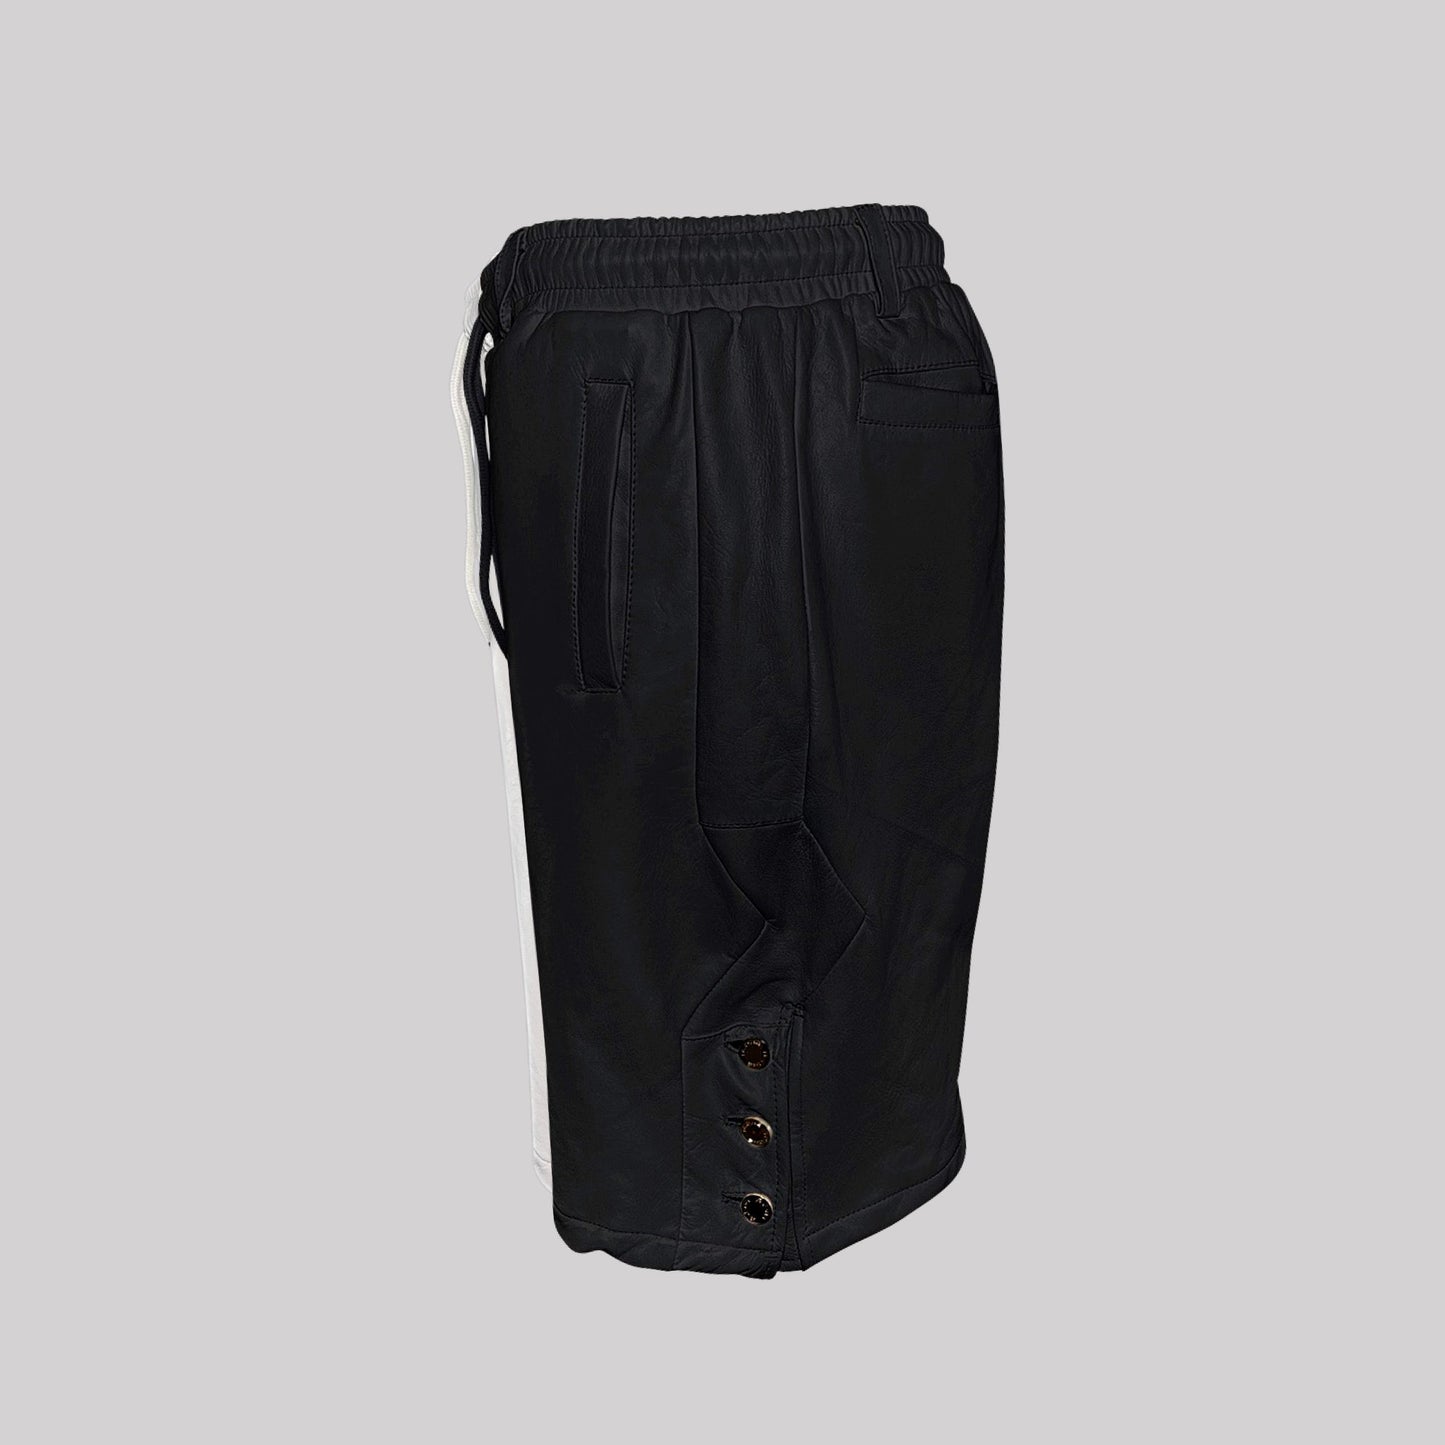 Leather Court Shorts (Black)